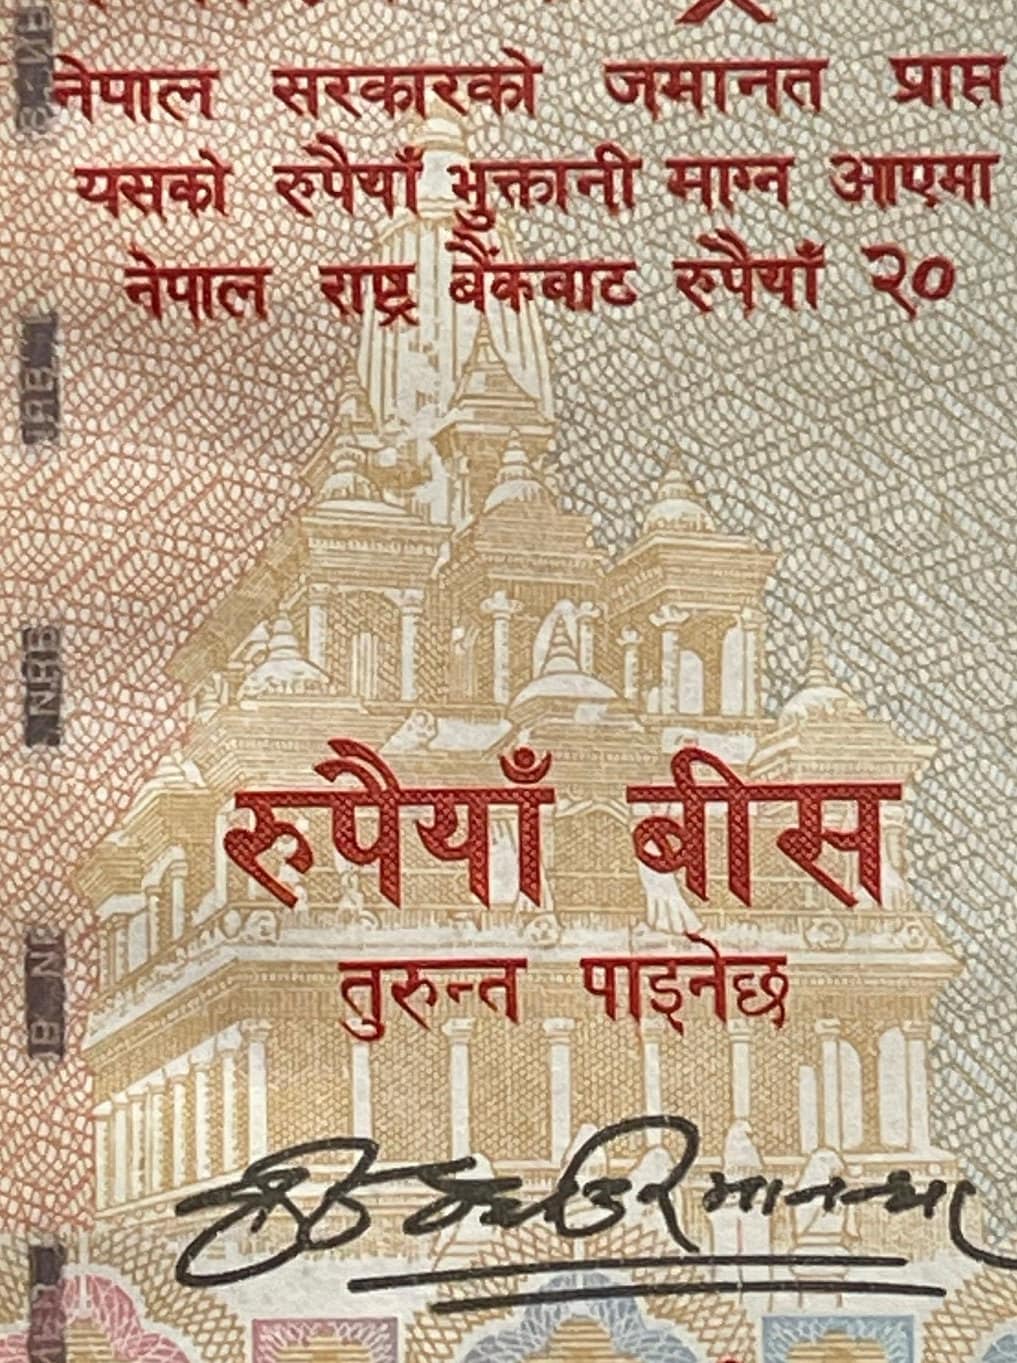 Sambar Deer; Flying Garuda; Krishna Mandir Temple; Mt Everest; Rhododendron 20 Rupees Nepal Authentic Banknote Money for Collage